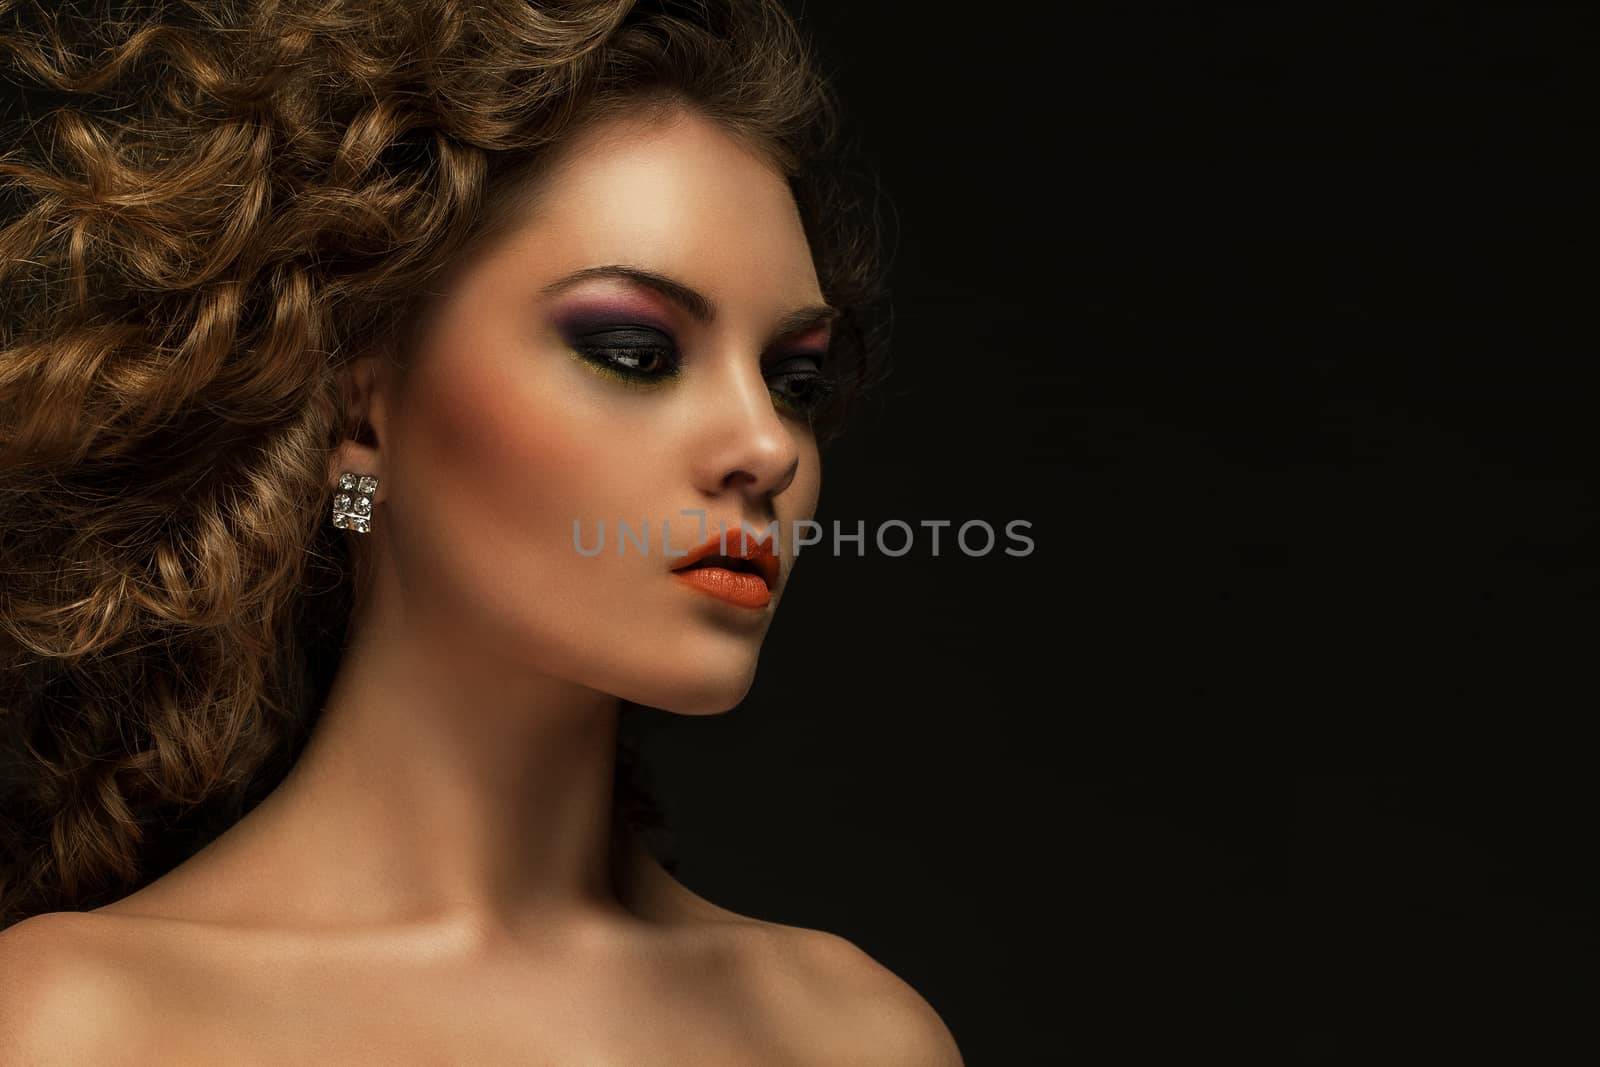 Beautiful caucasian woman with curls and evening makeup